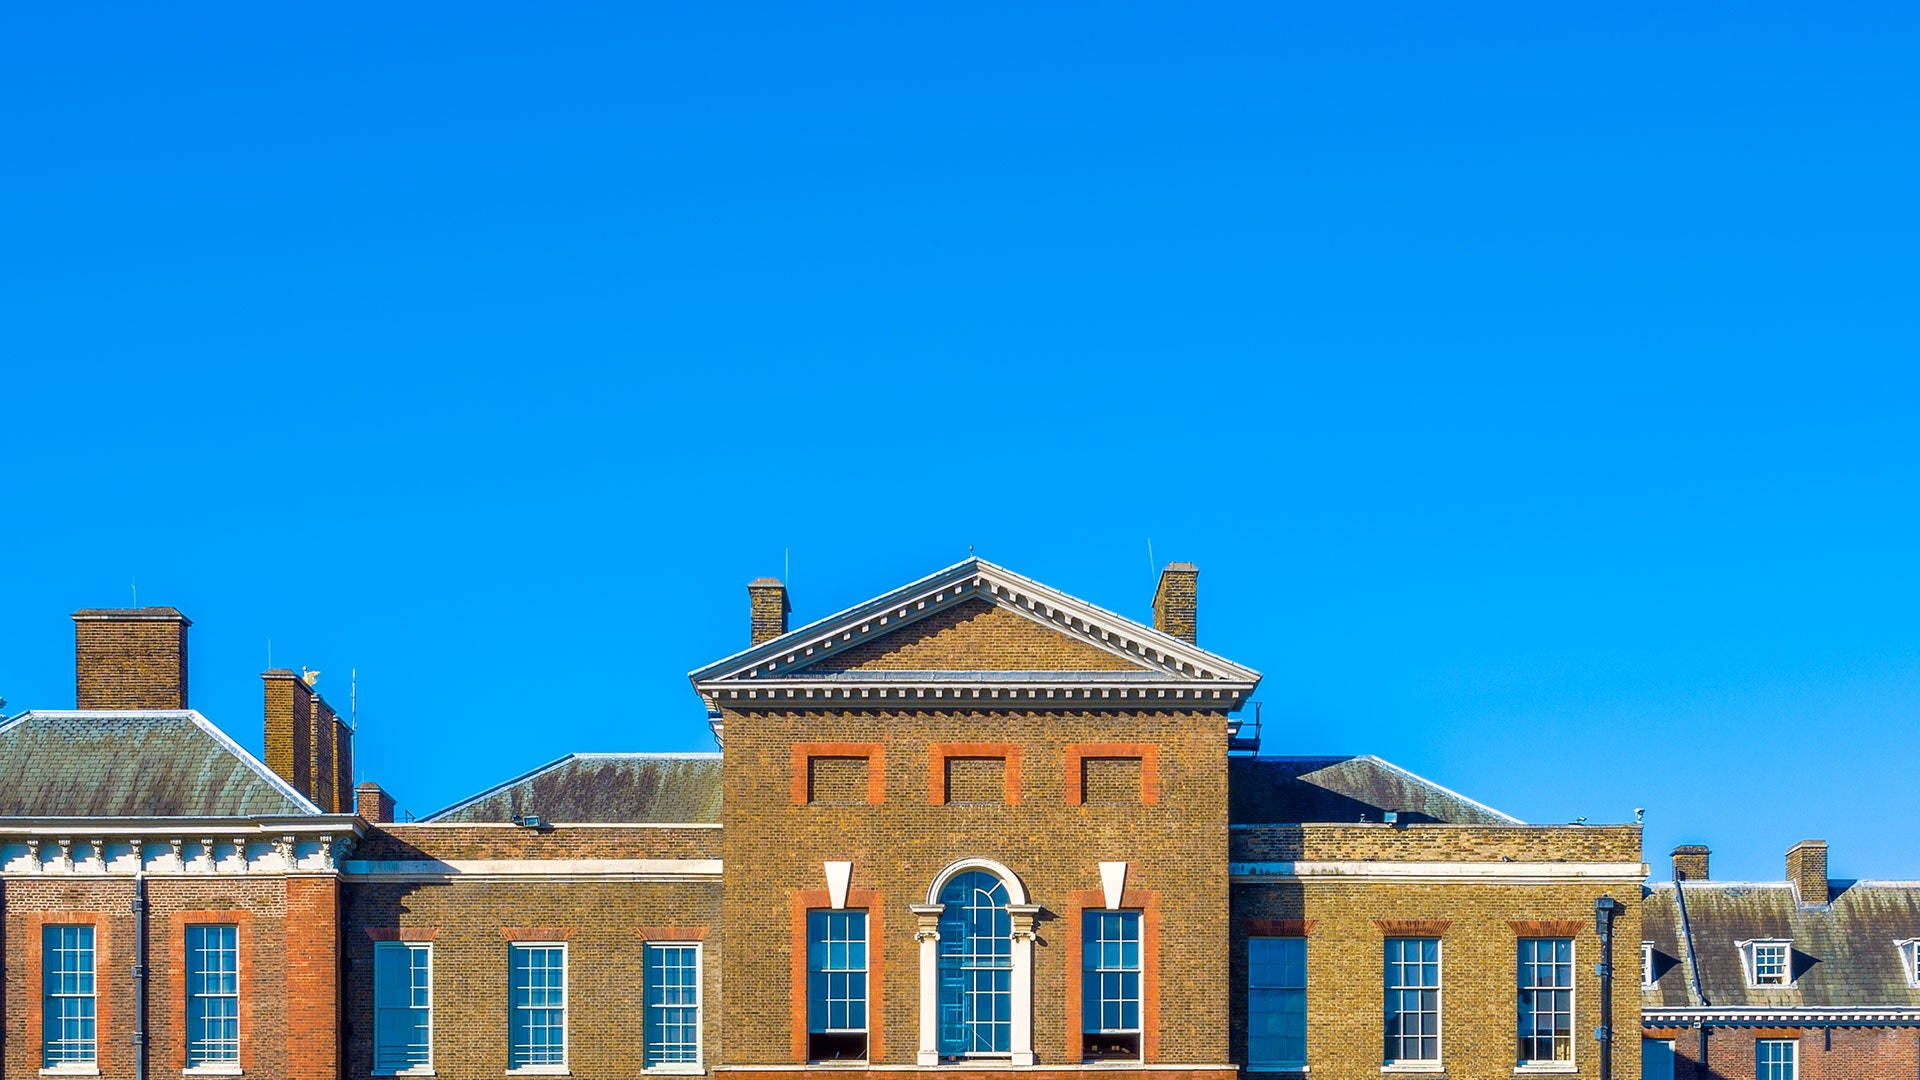 Kensington Palace Roof Blue Sky Picture